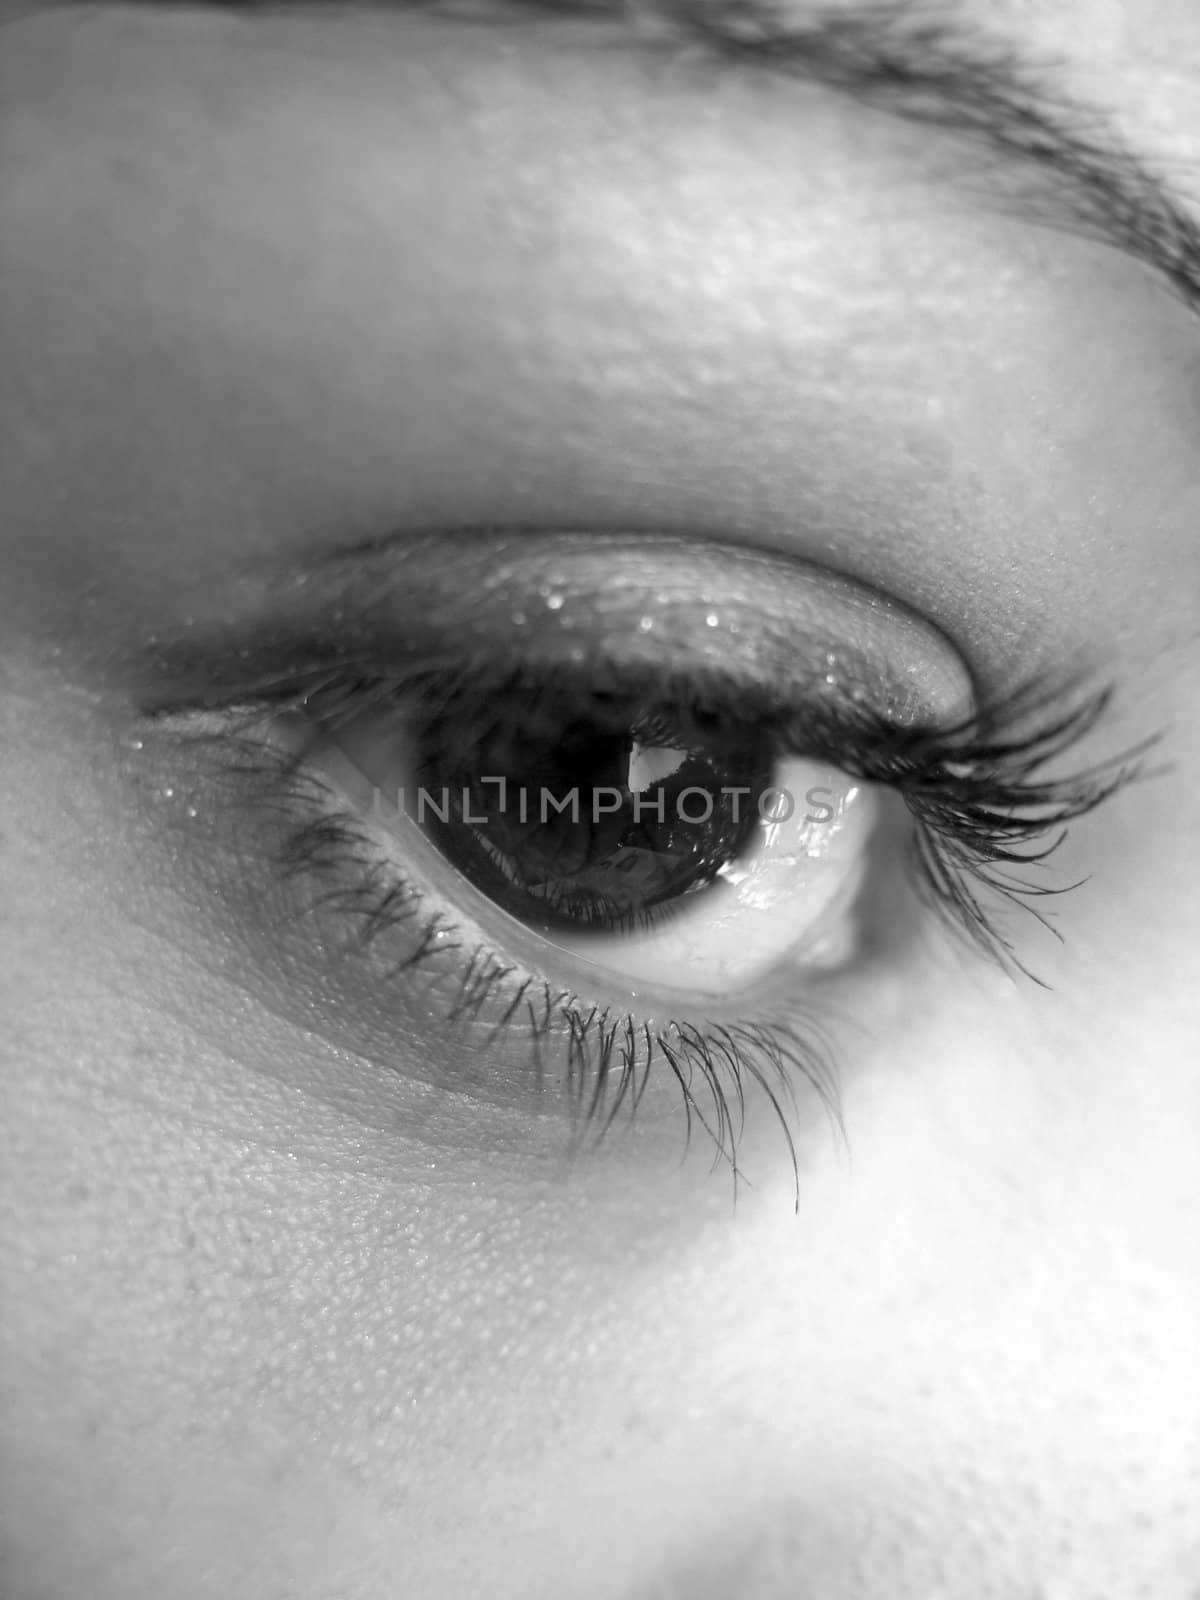 A macro shot of a pretty eye in black and white.